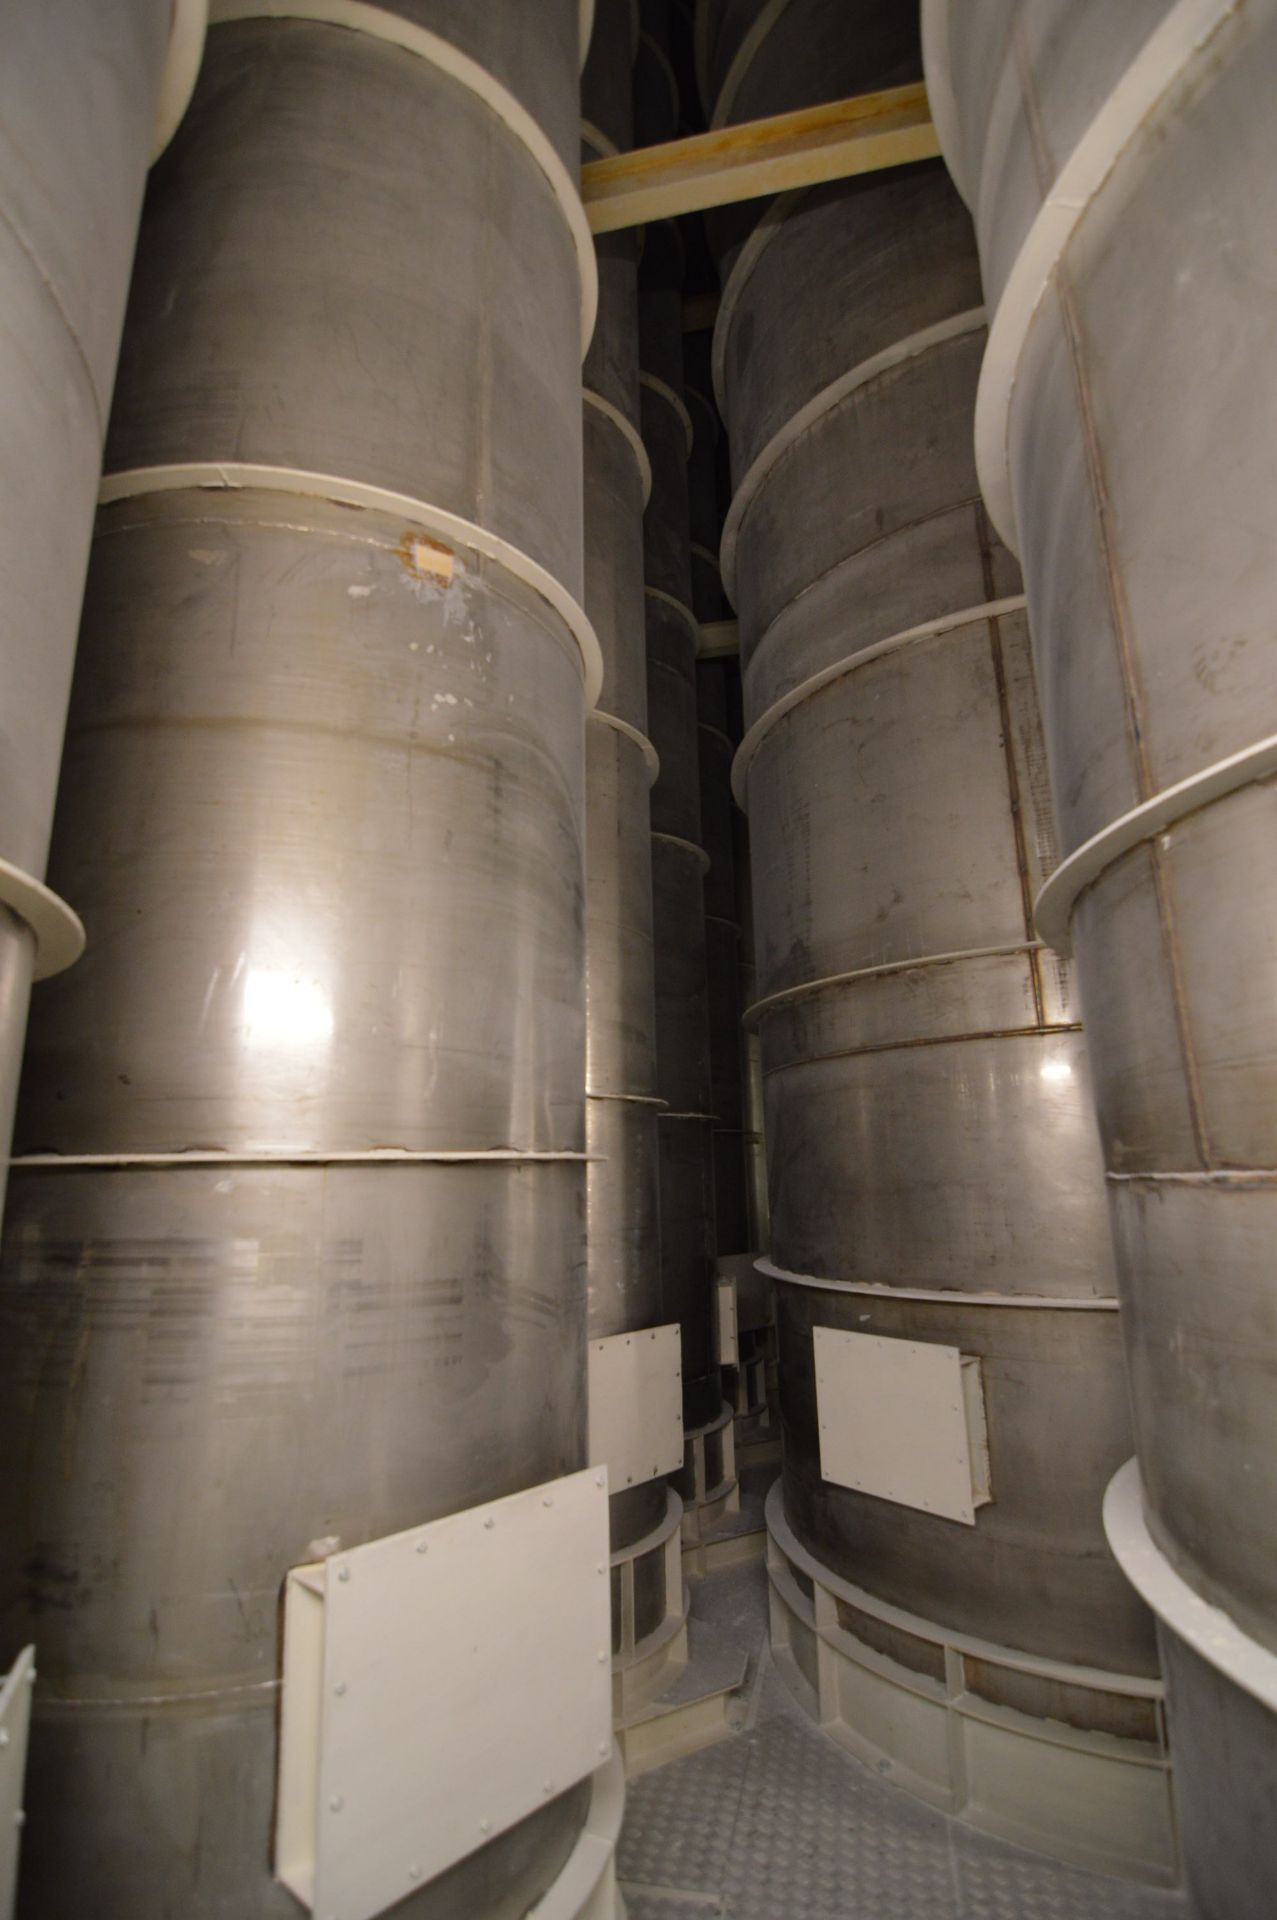 NEST OF NINE STAINLESS STEEL FLOUR STORAGE BINS, comprising two x 50 tonne cap., one x 25 tonne